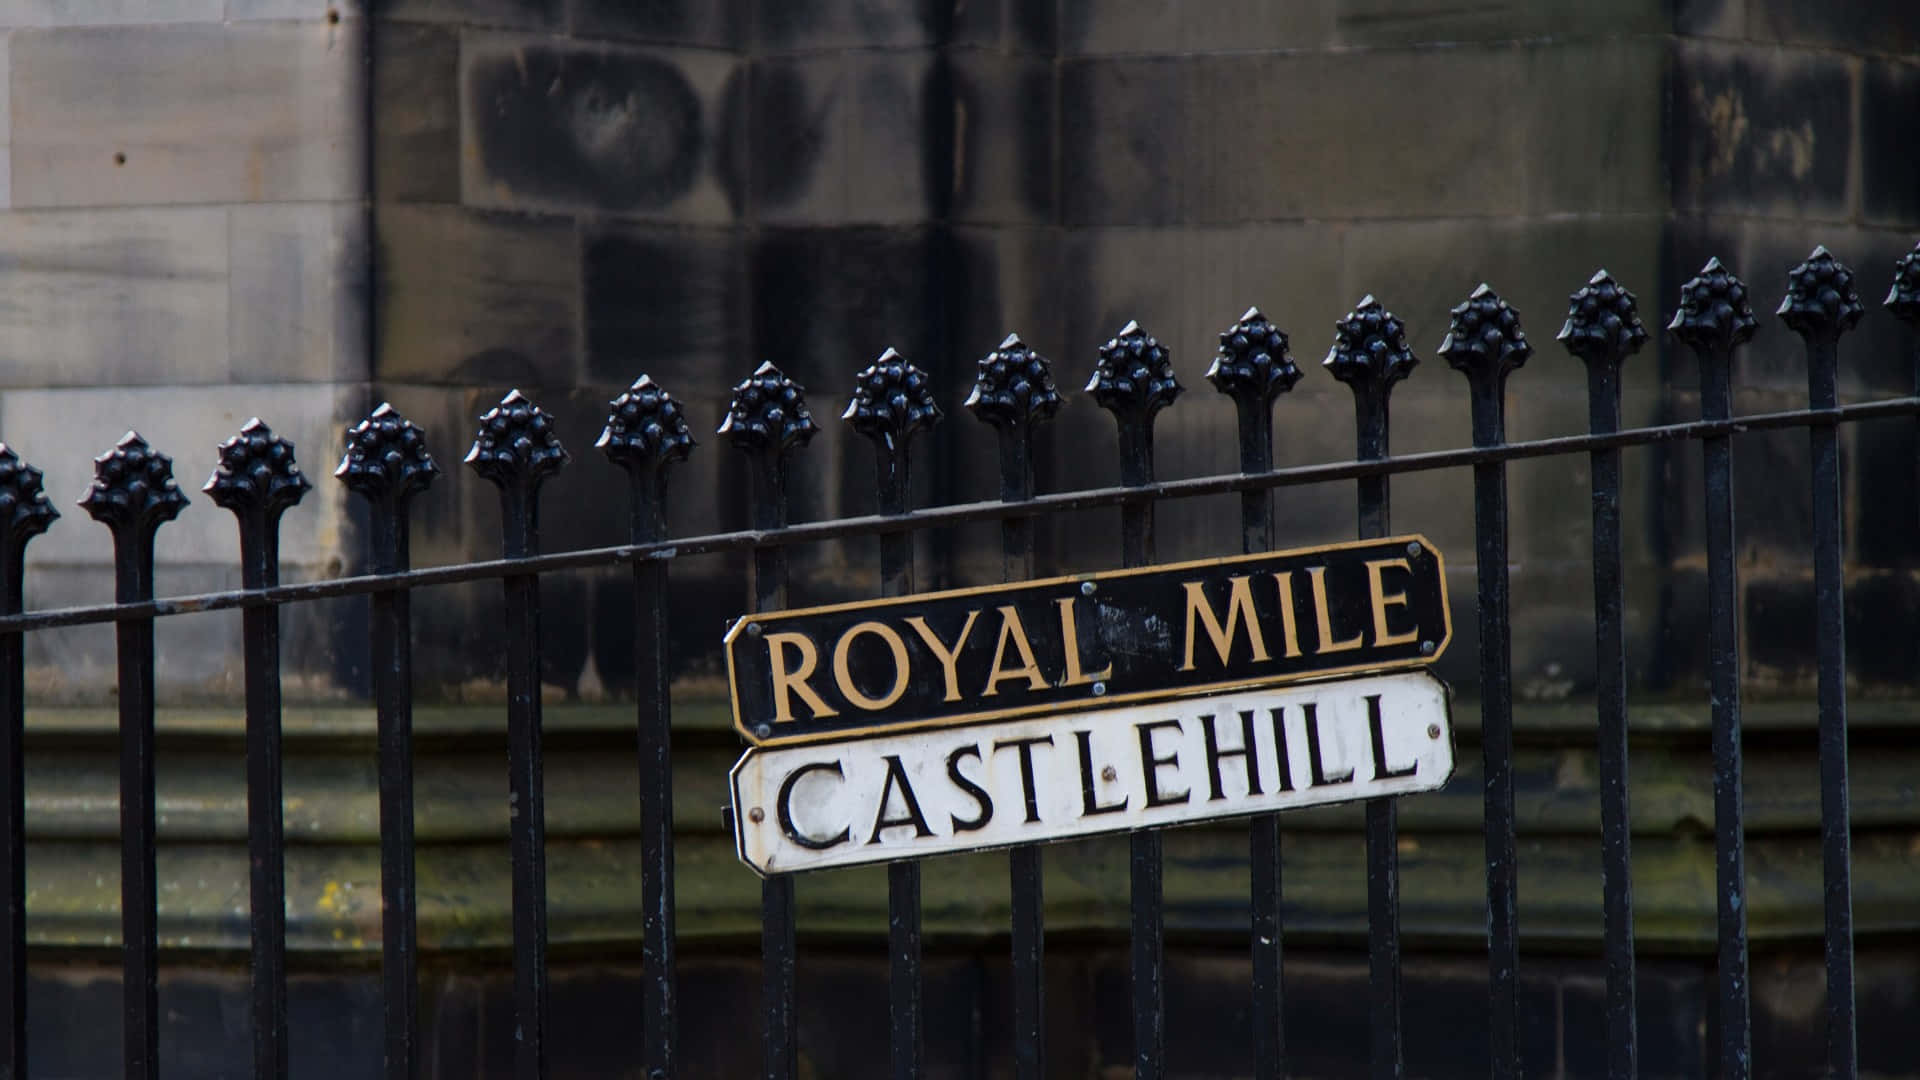 Royal Mile Castlehill Signon Fence Wallpaper